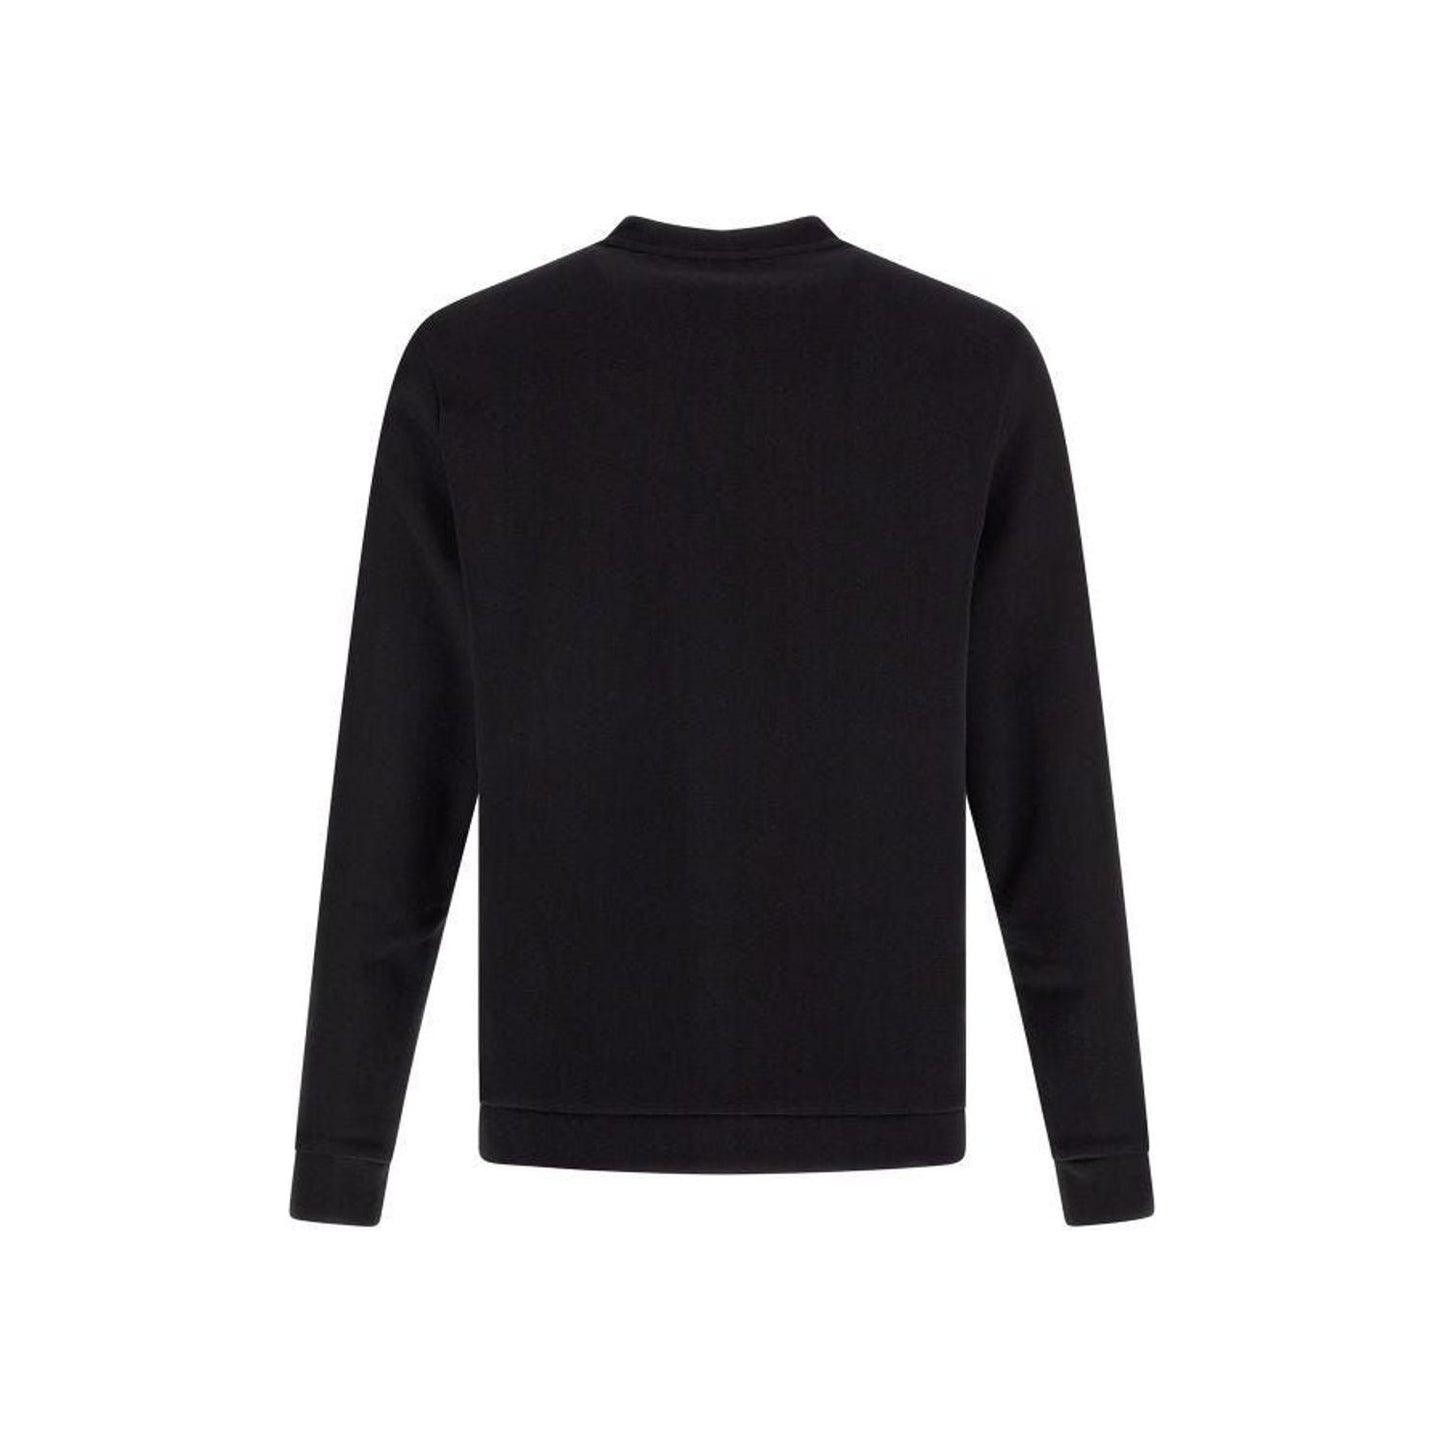 Hugo Boss Elegant Black Cotton Round Neck Sweatshirt black-cotton-logo-details-sweatshirt 50474192-001-1-c57215df-aa8.jpg